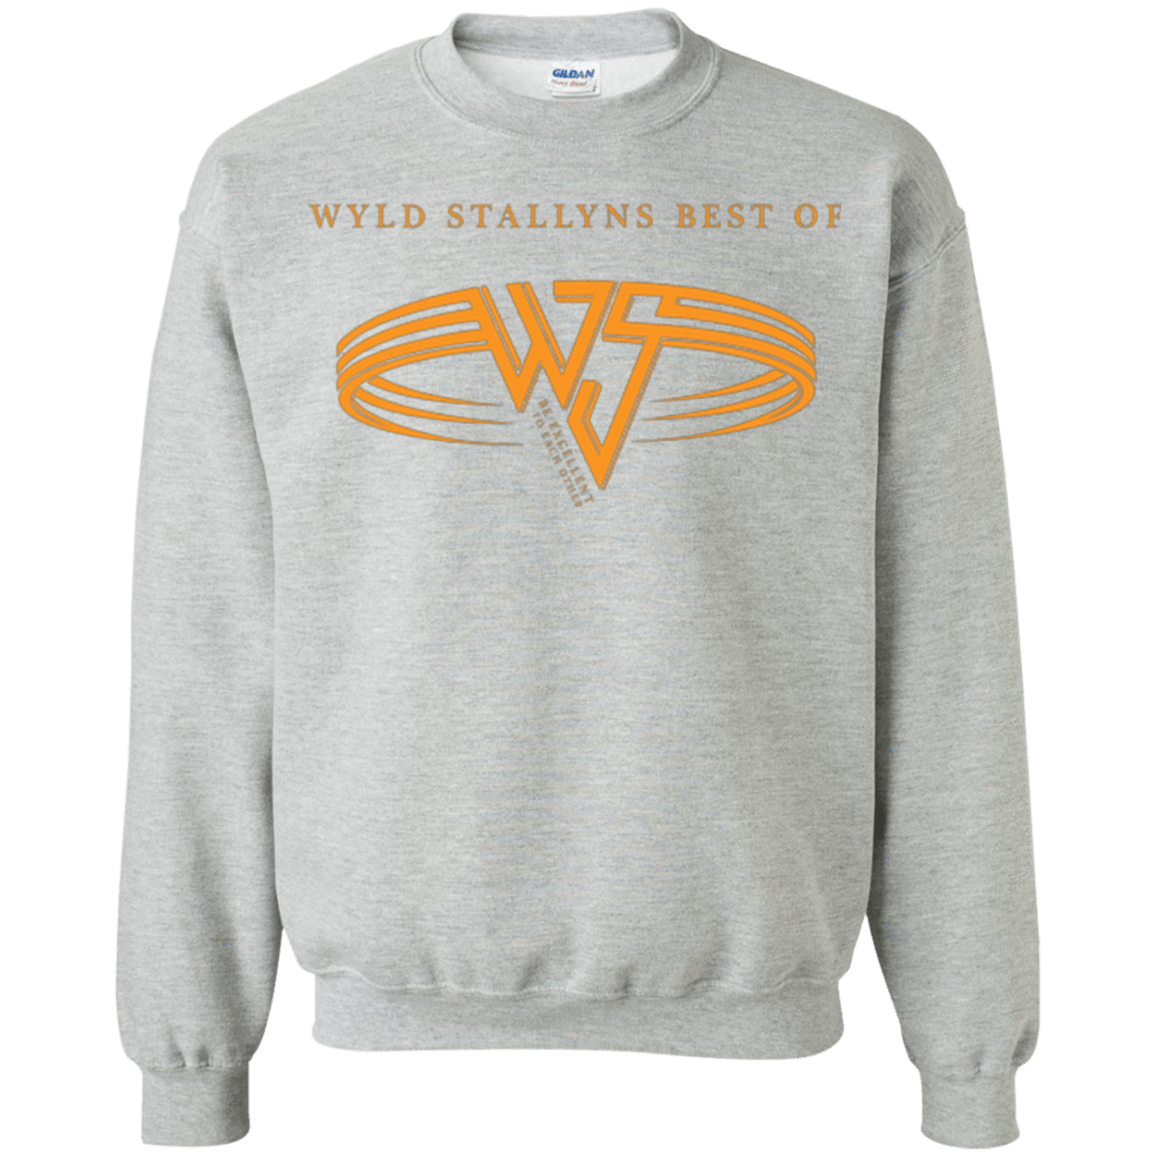 Sweatshirts Sport Grey / Small Be Excellent To Each Other Crewneck Sweatshirt